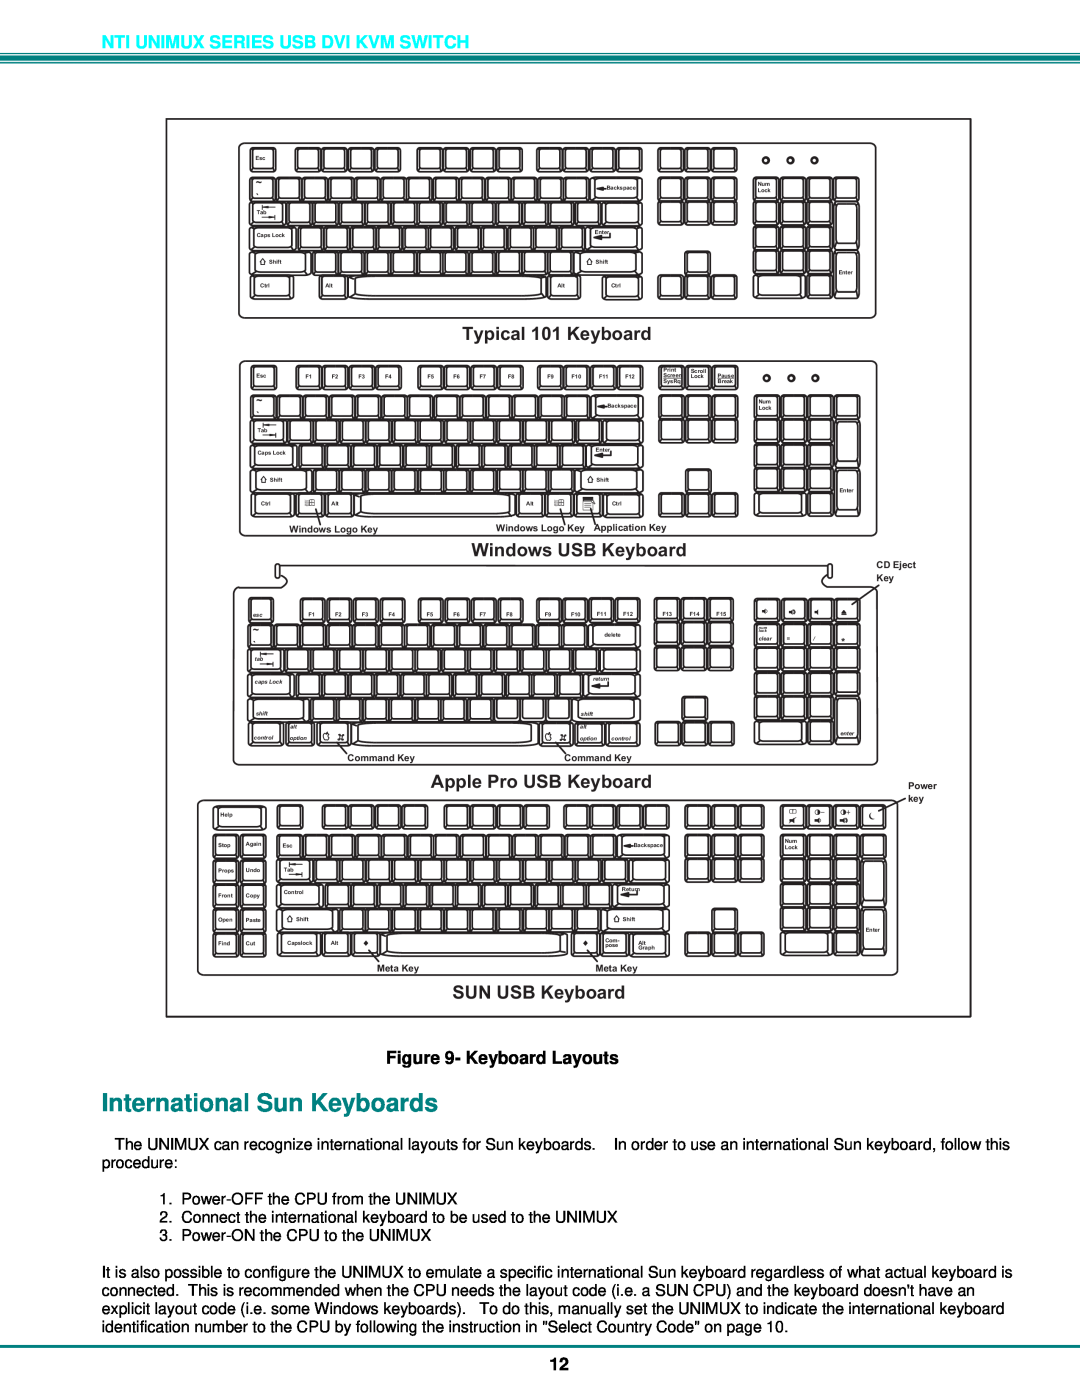 Network Technologies DVI-4 International Sun Keyboards, Typical101Keyboard, WindowsUSBKeyboard, AppleProUSBKeyboard 